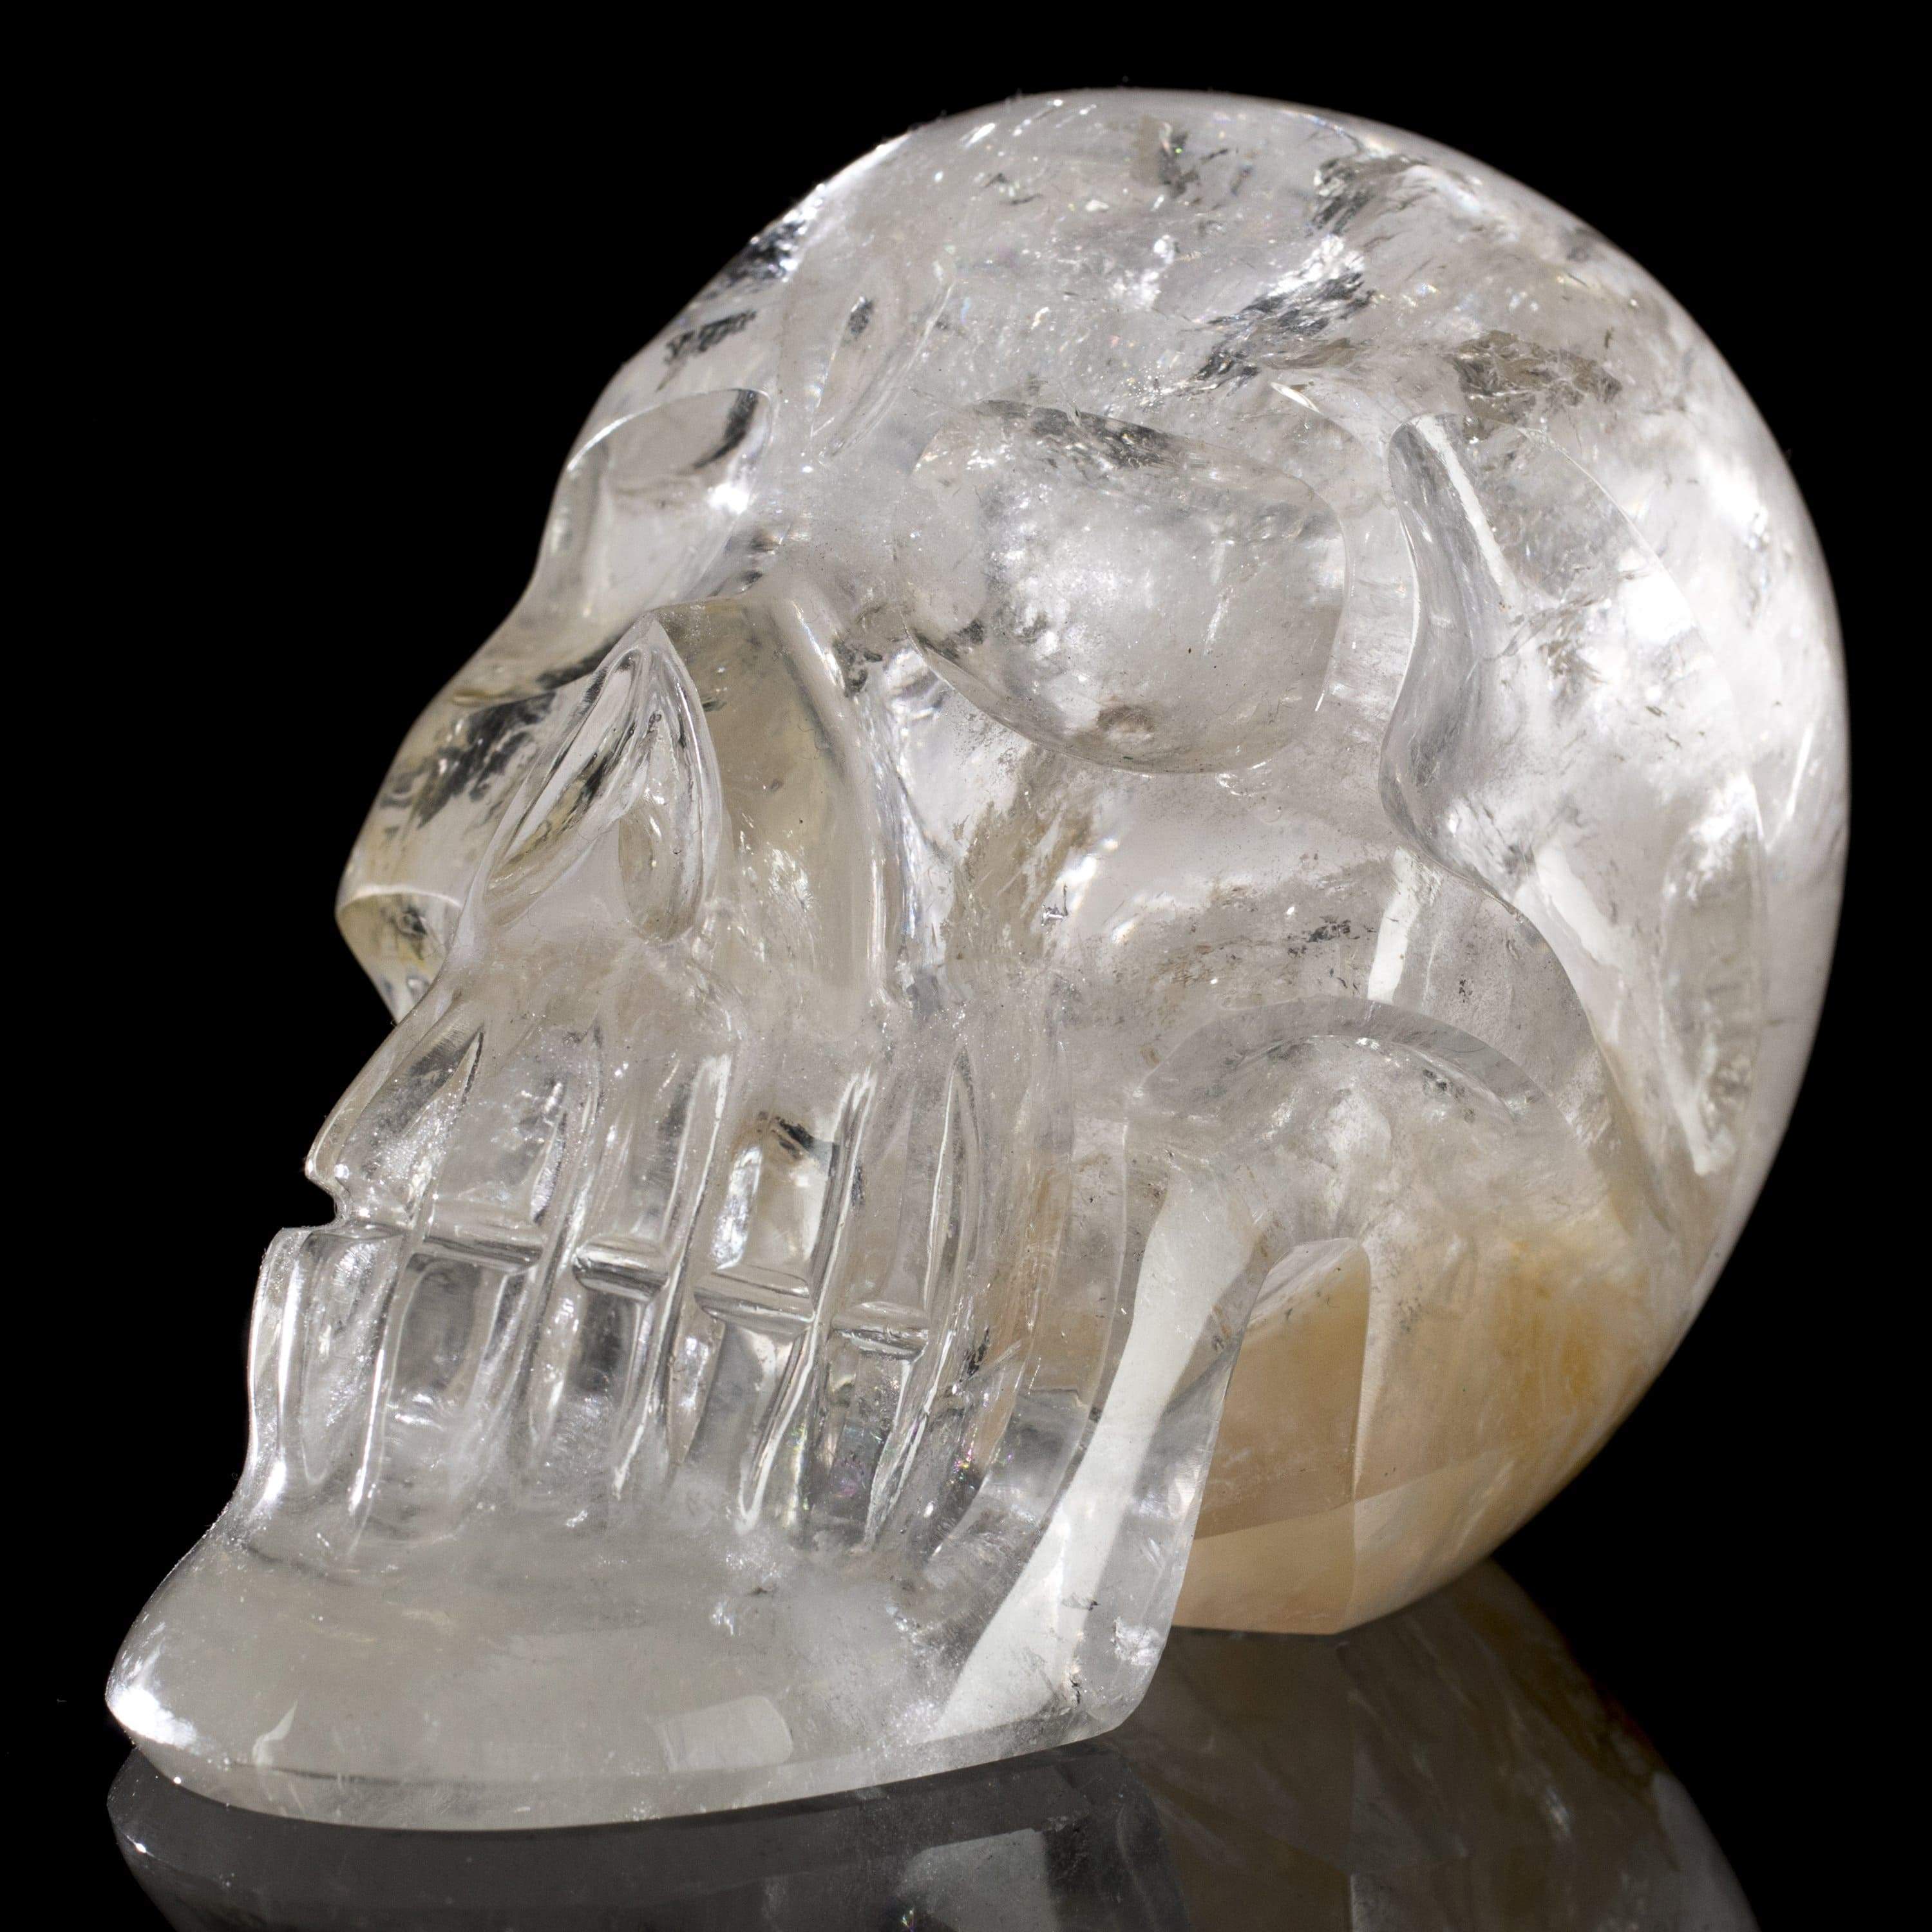 Kalifano Gemstone Carvings Natural Hand Carved Brazilian Quartz Skull - 3.7 in. / 4 lbs SK4500.002